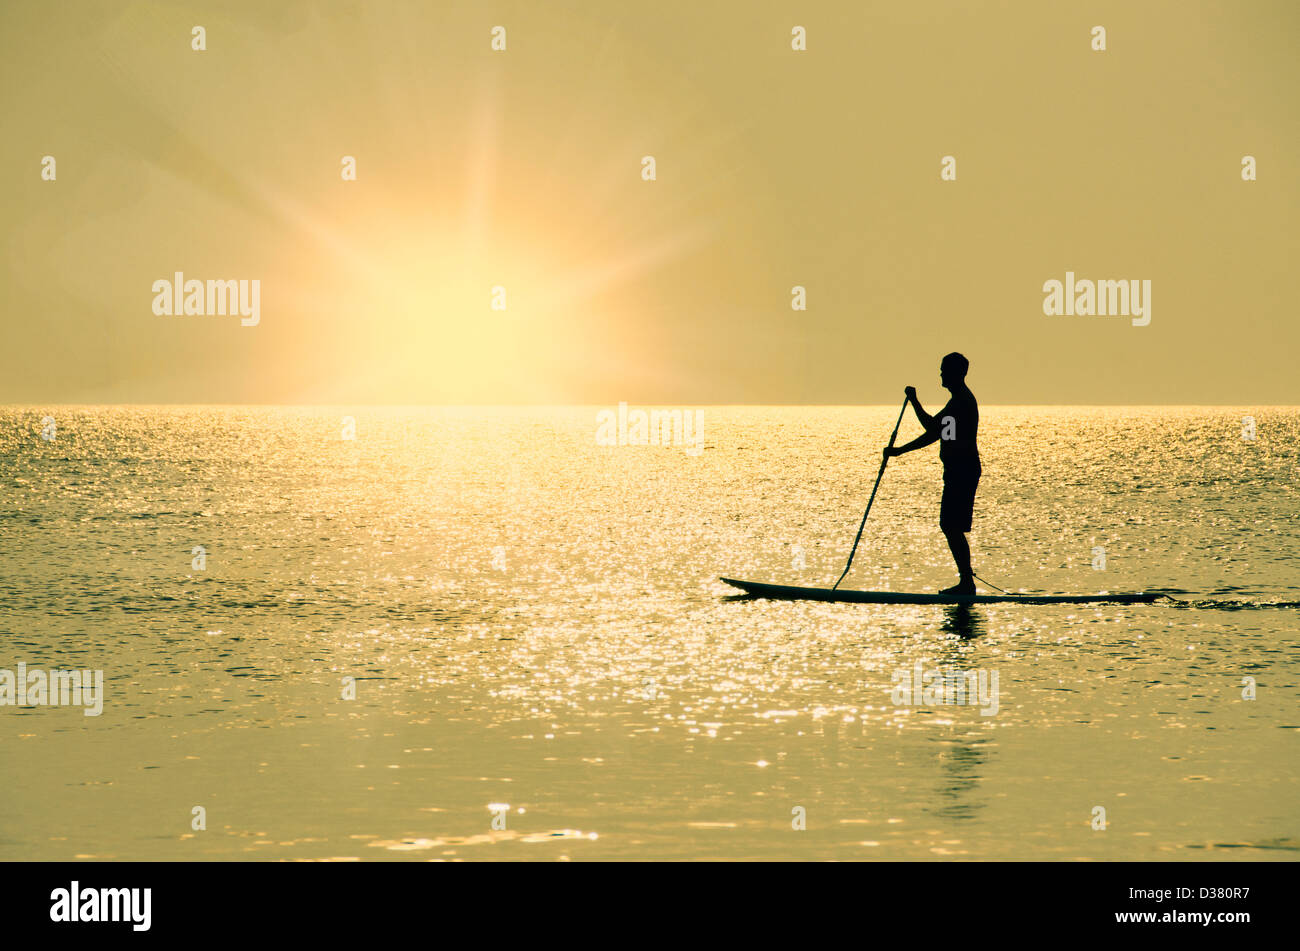 USA, North Carolina, Nags Head, Man standing on paddle board at sunset Stock Photo